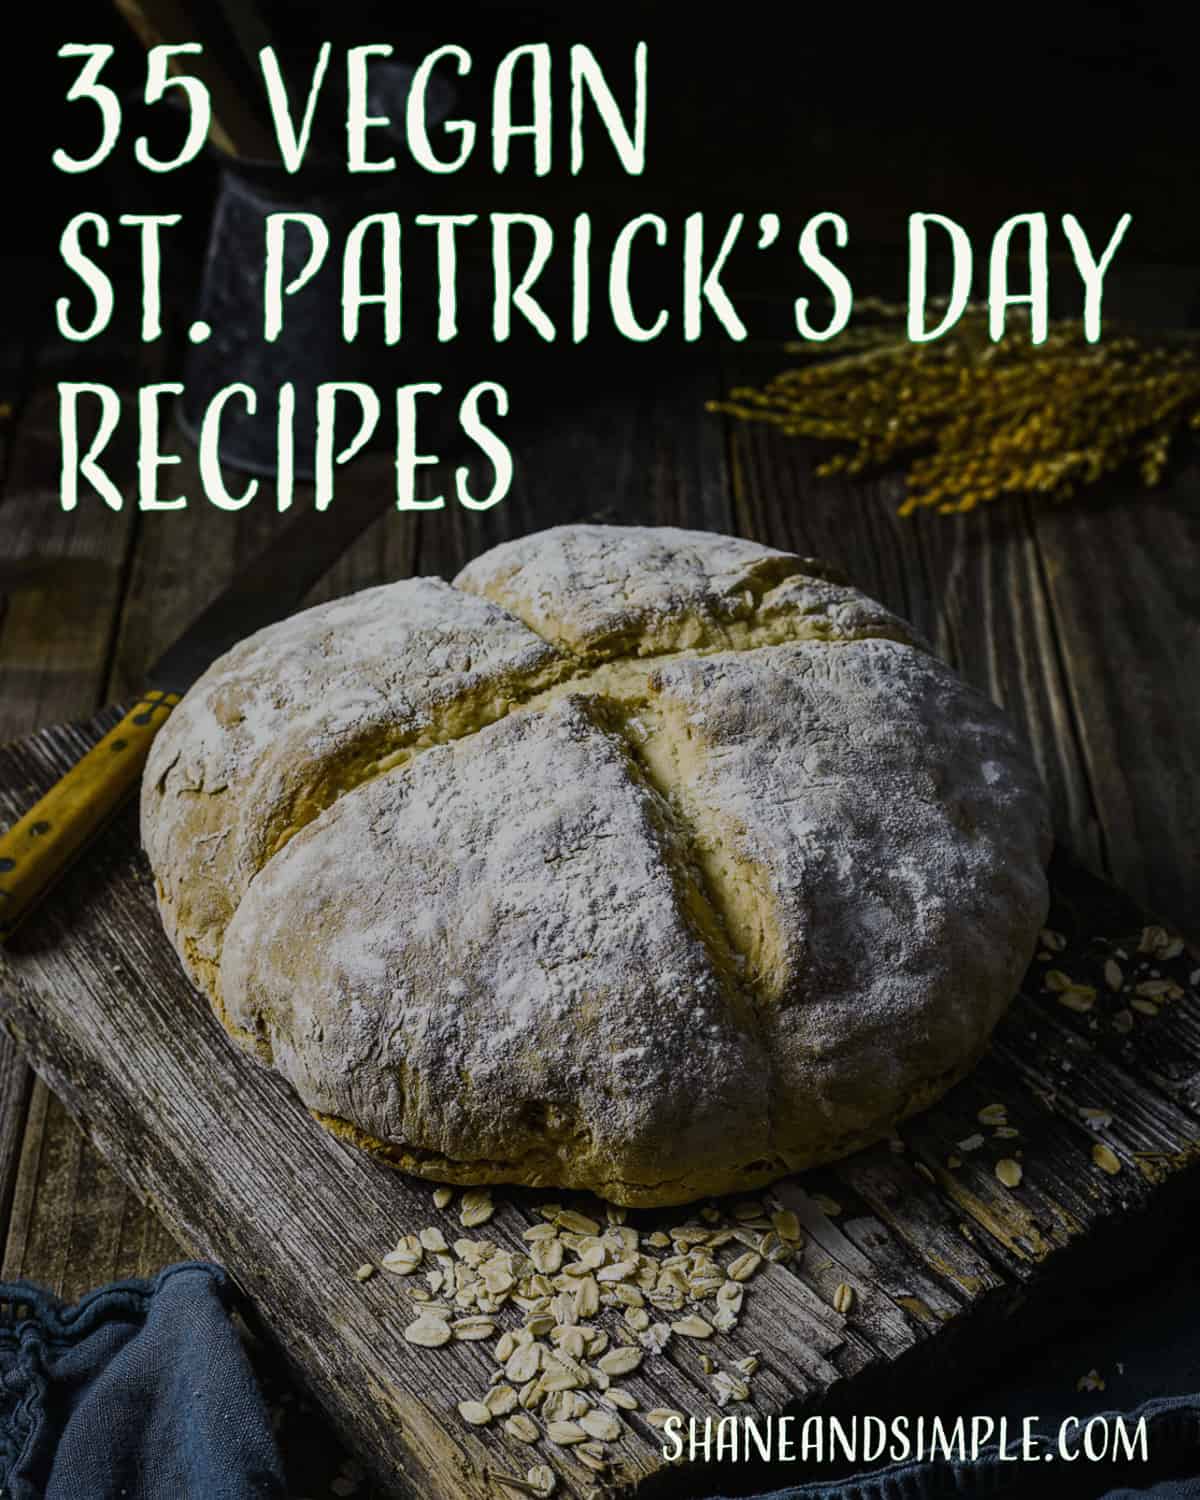 35 vegan st. patrick's day recipes